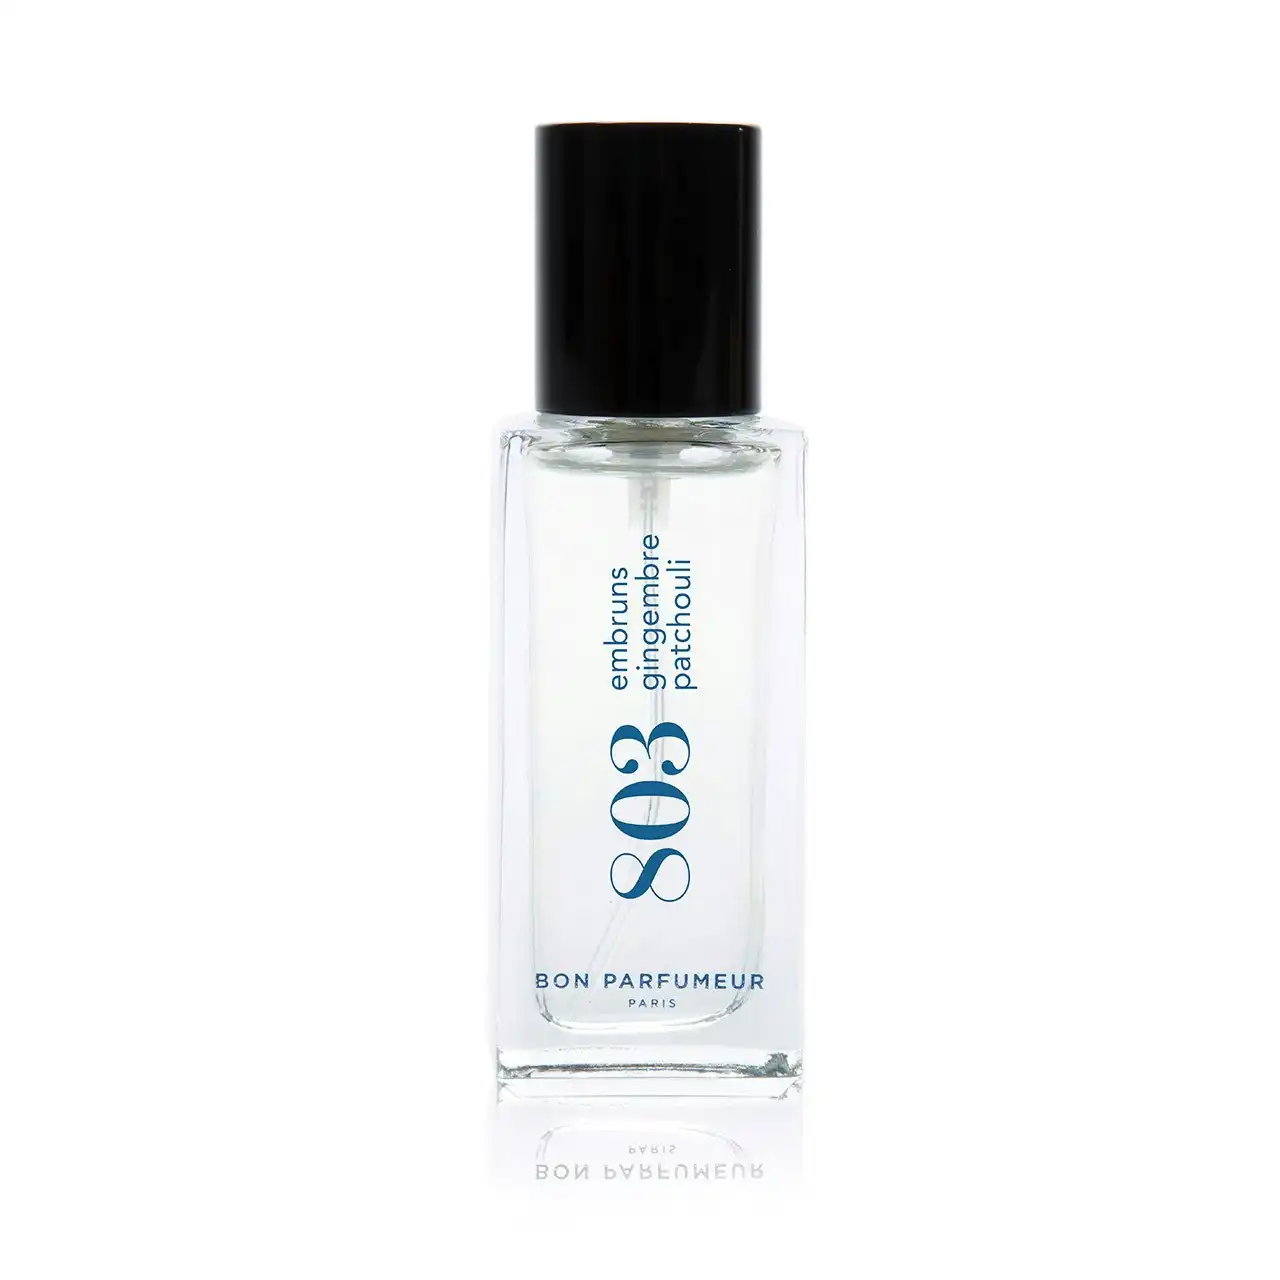 Bon Parfumeur 15ml Eau De Parfum 803 Aquatic EDP Fragrance Spray For Men/Women